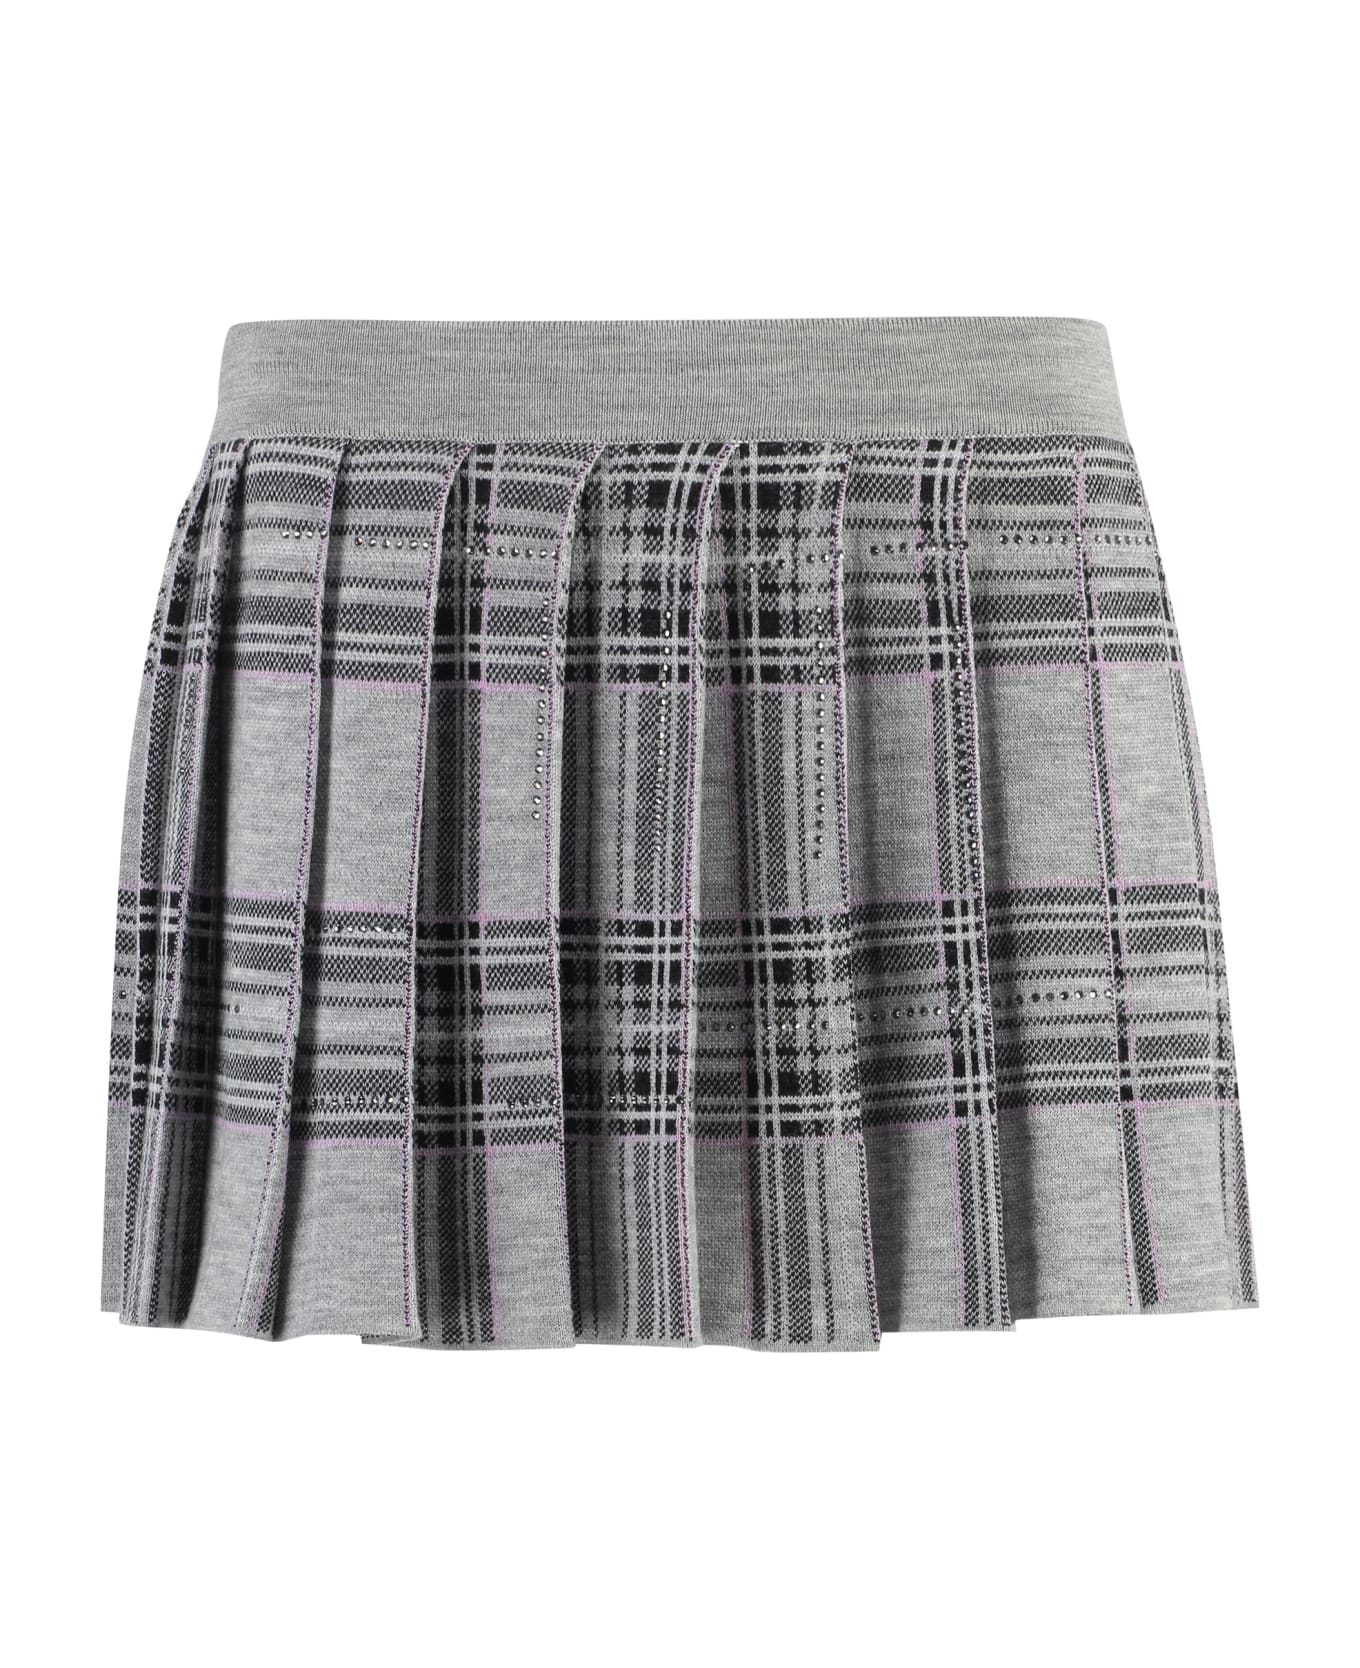 Giuseppe di Morabito Pleated Knitted Skirt - grey スカート